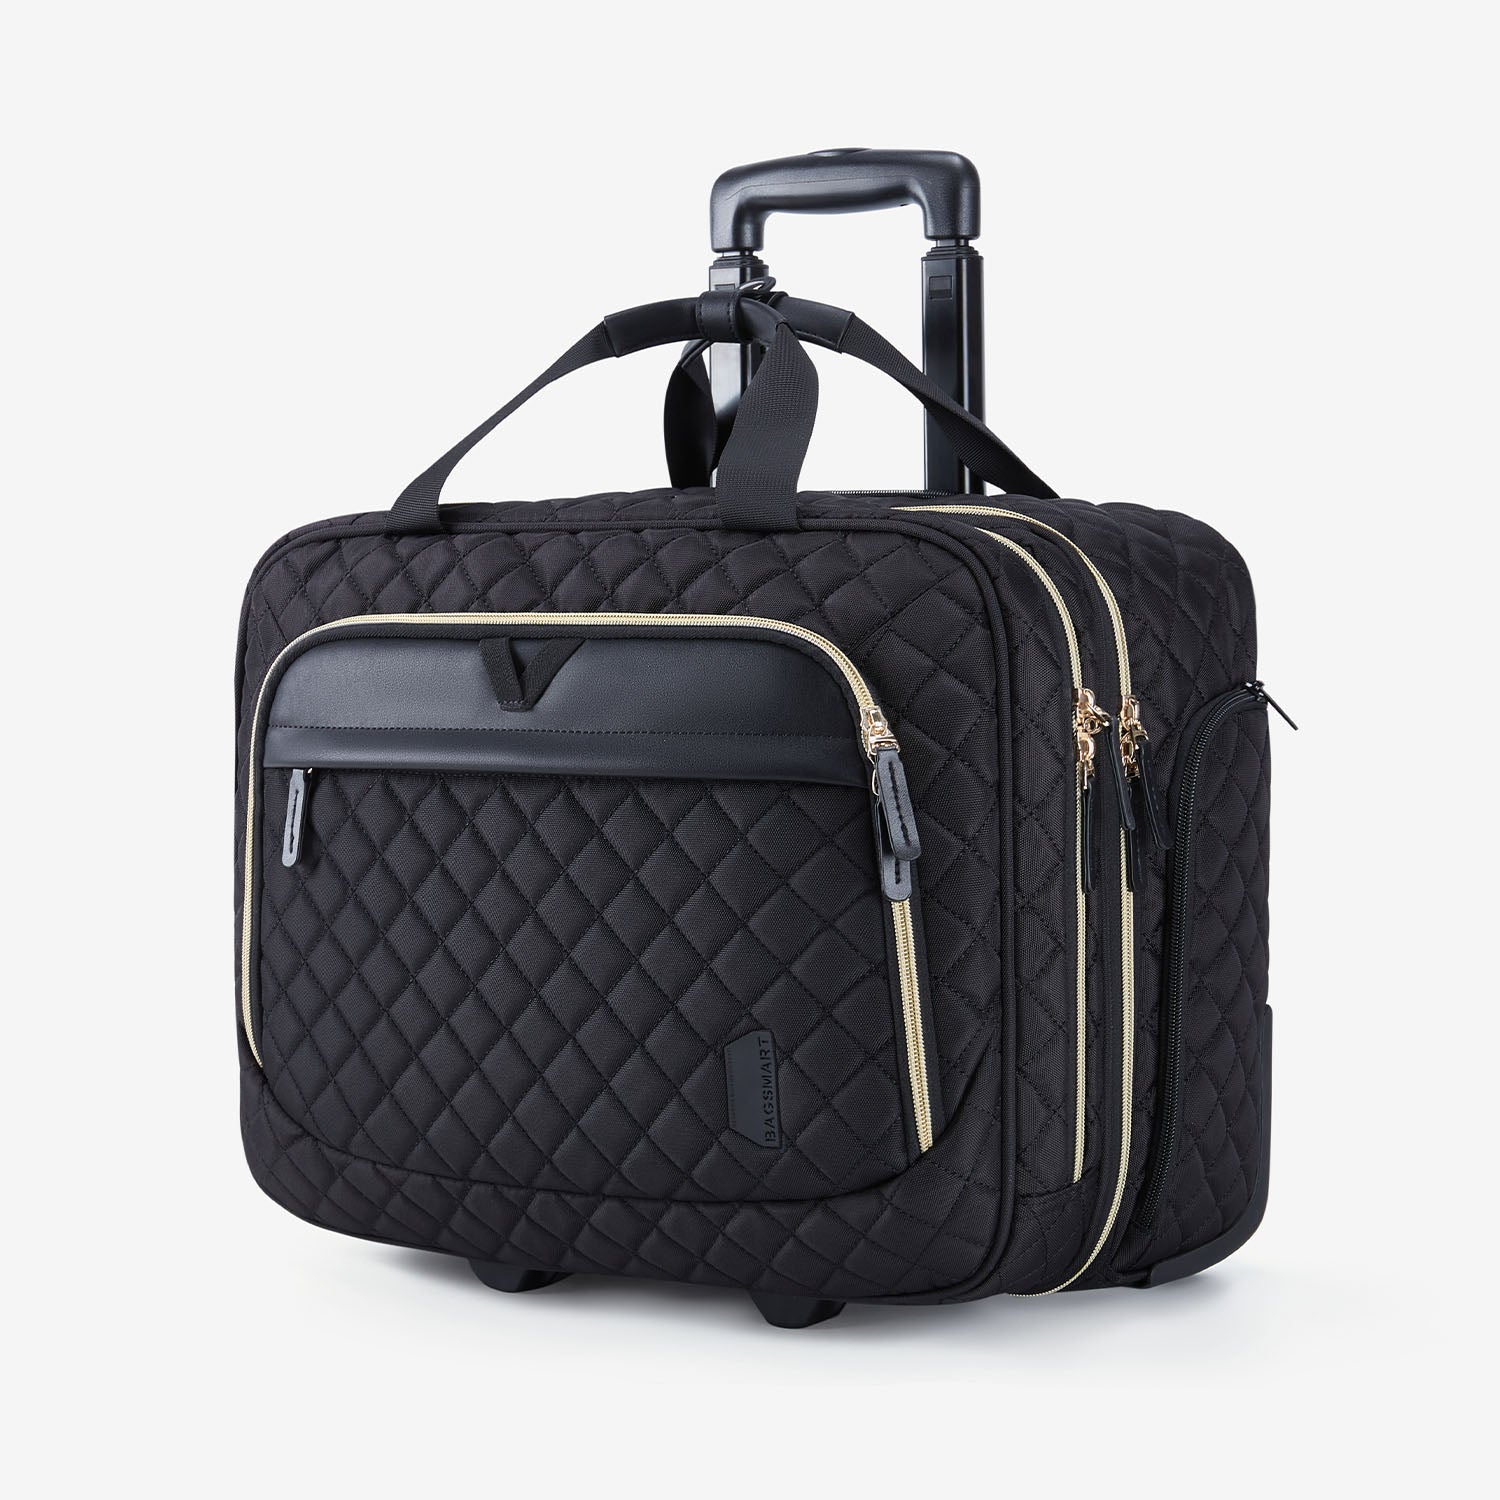 BAGSMART Laptop Bag for Women, 15.6 Inch Laptop Case Computer Bag Briefcase  for Ladies